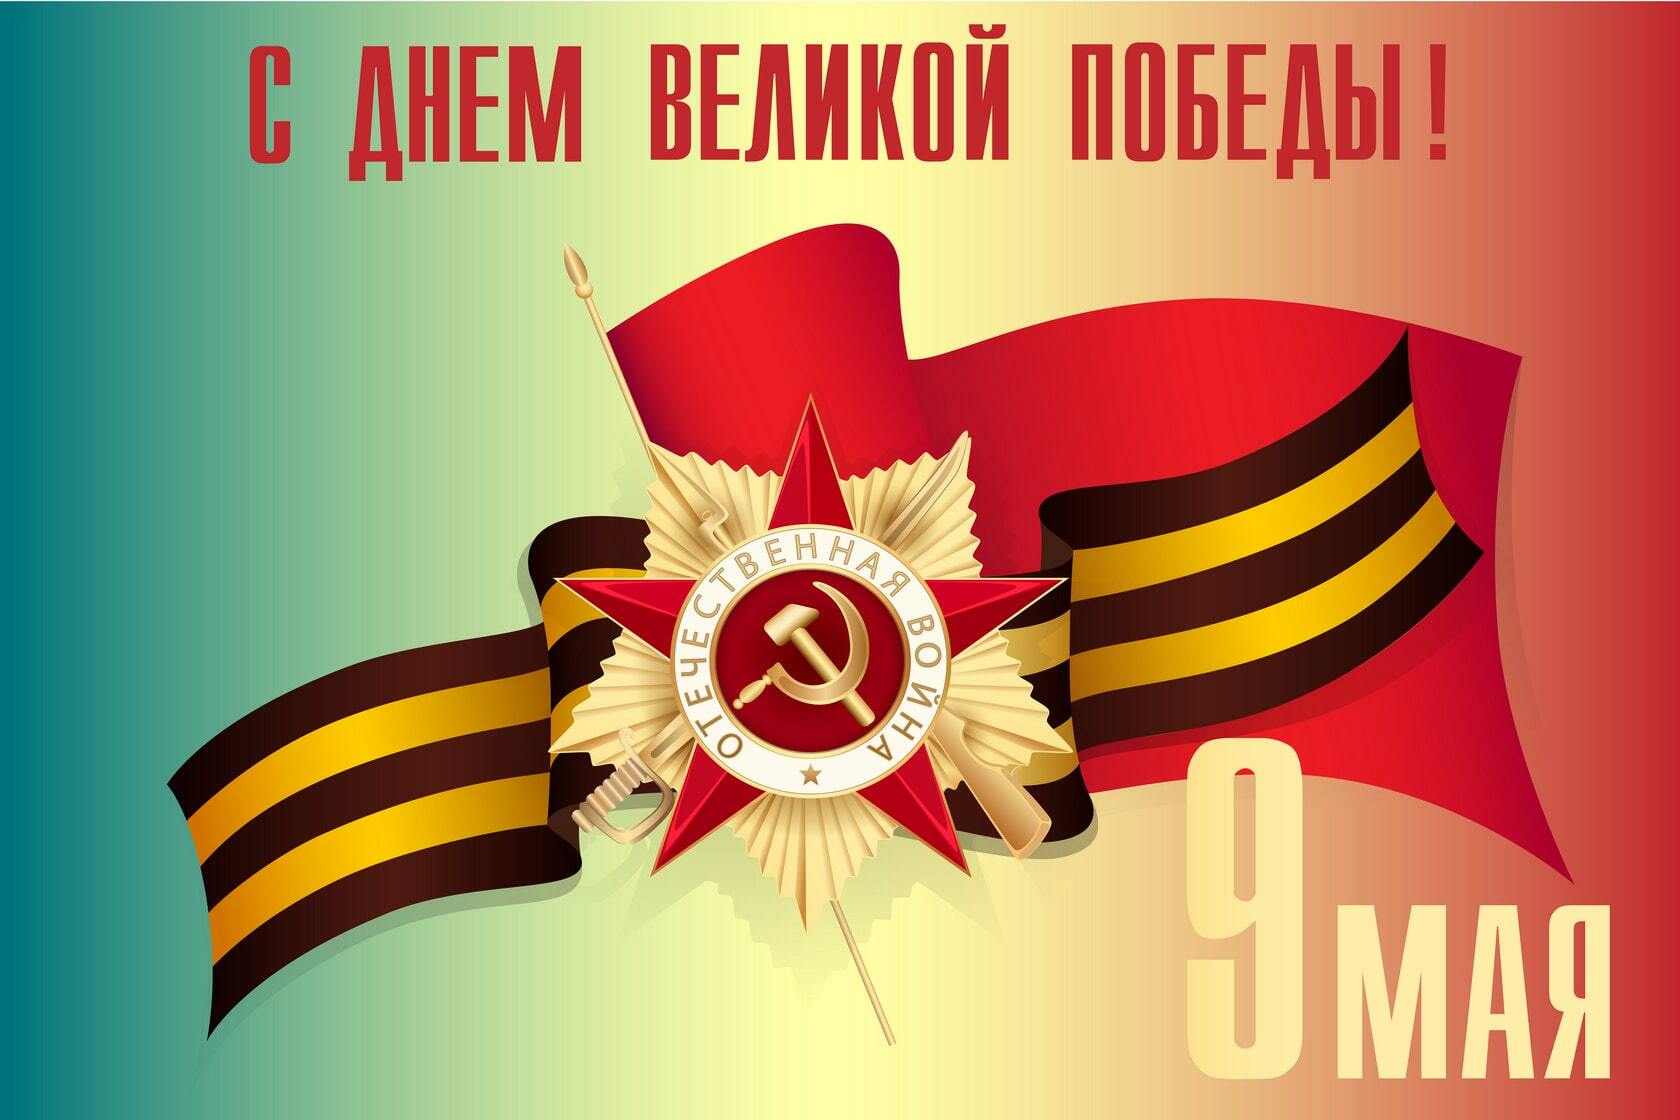 9 Мая плакат дизайн 41-45. 9 мая русский язык